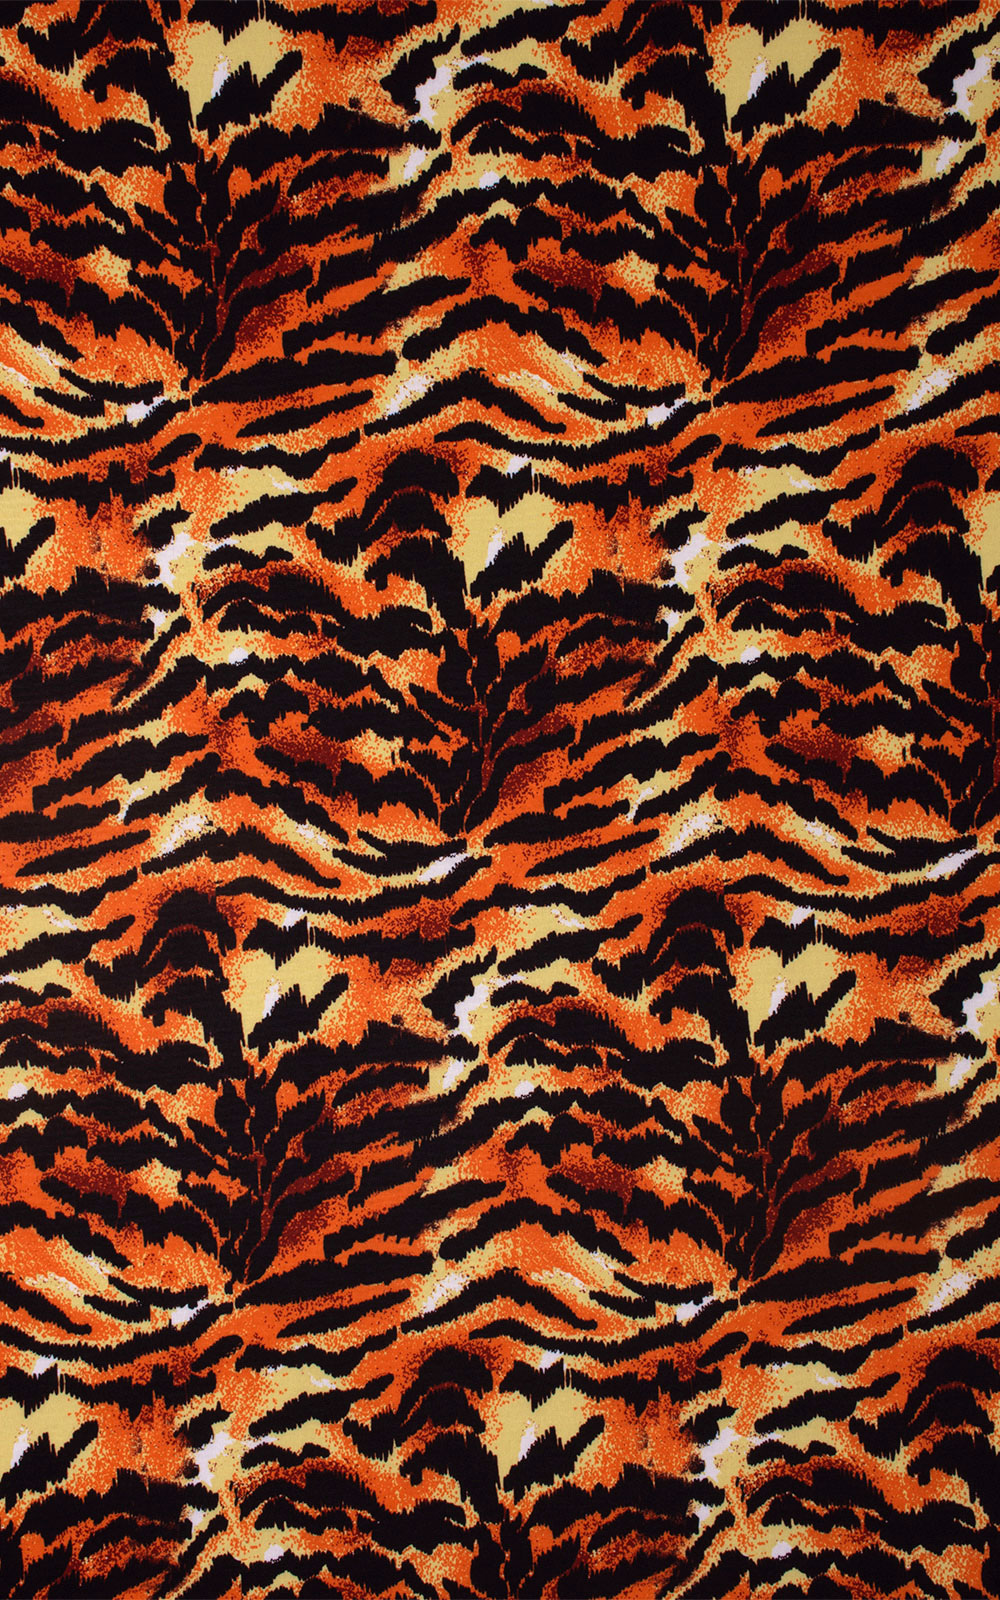 Brazilian Triangle Swim Top in Super ThinSKINZ Wild Tiger Fabric